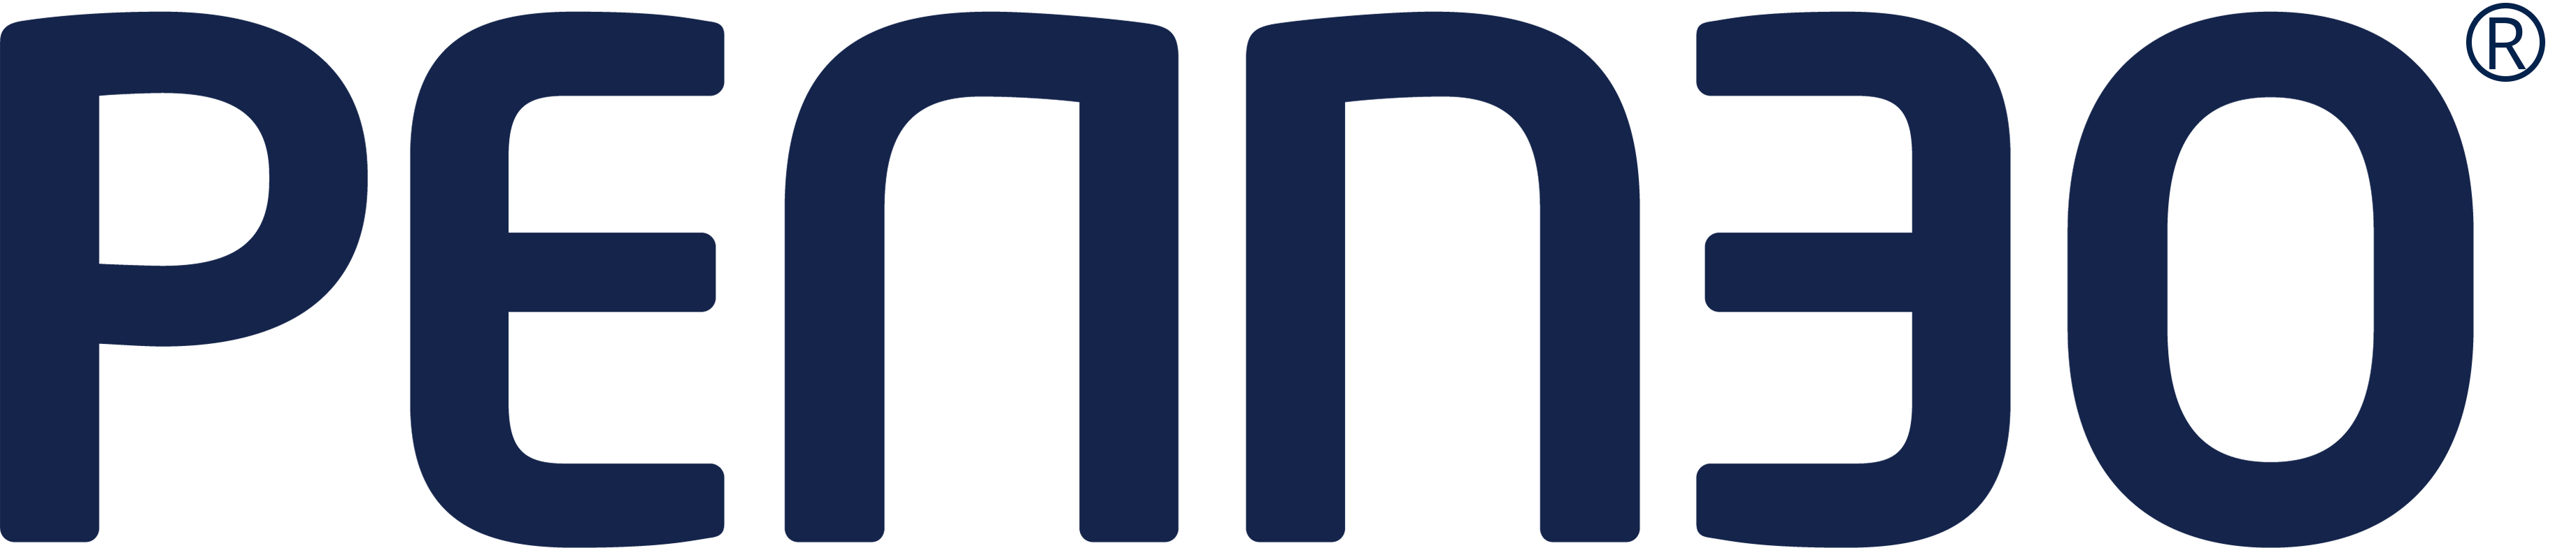 Penneo transparent dark blue logo